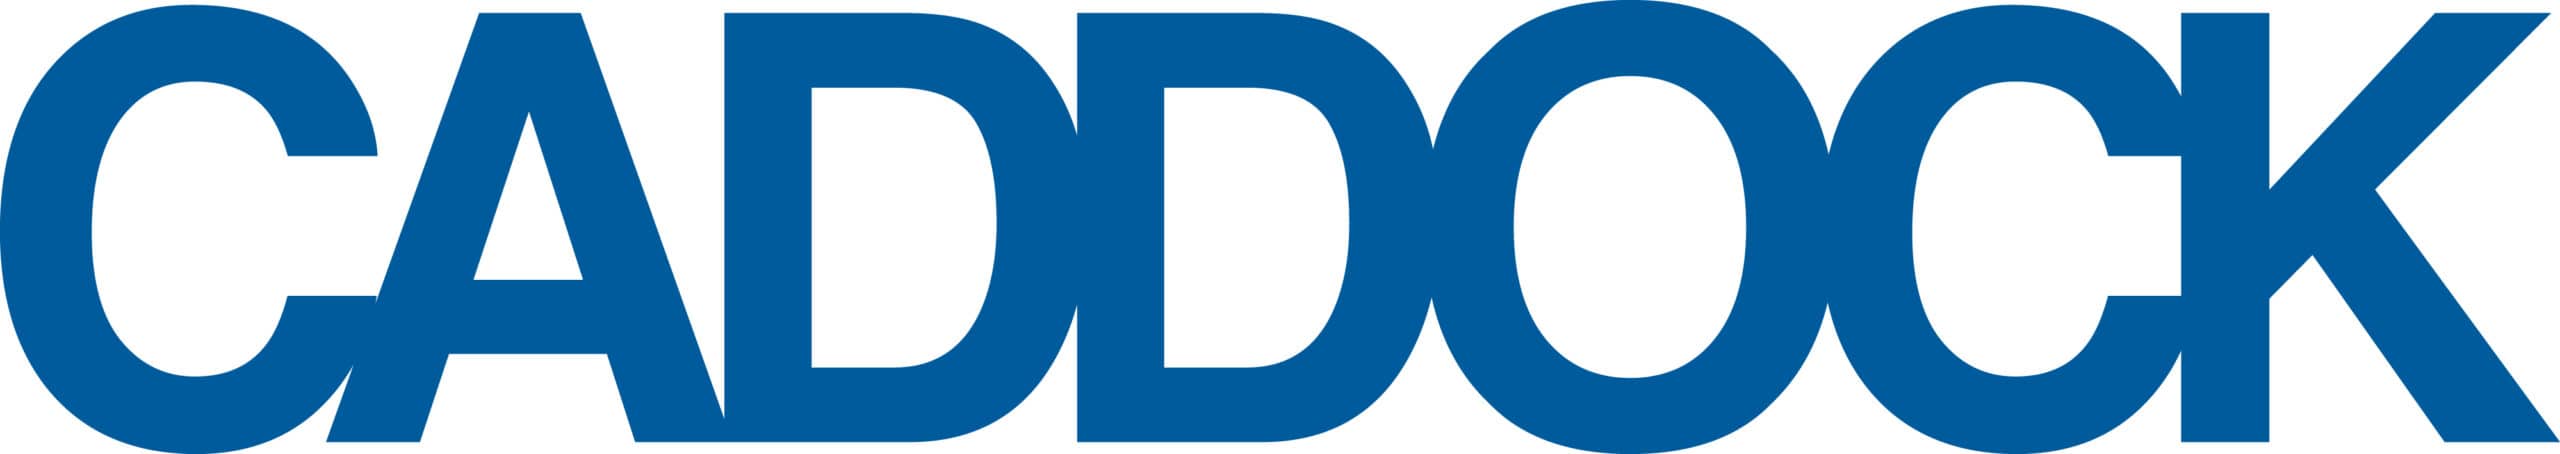 Caddock Company Logo 2020